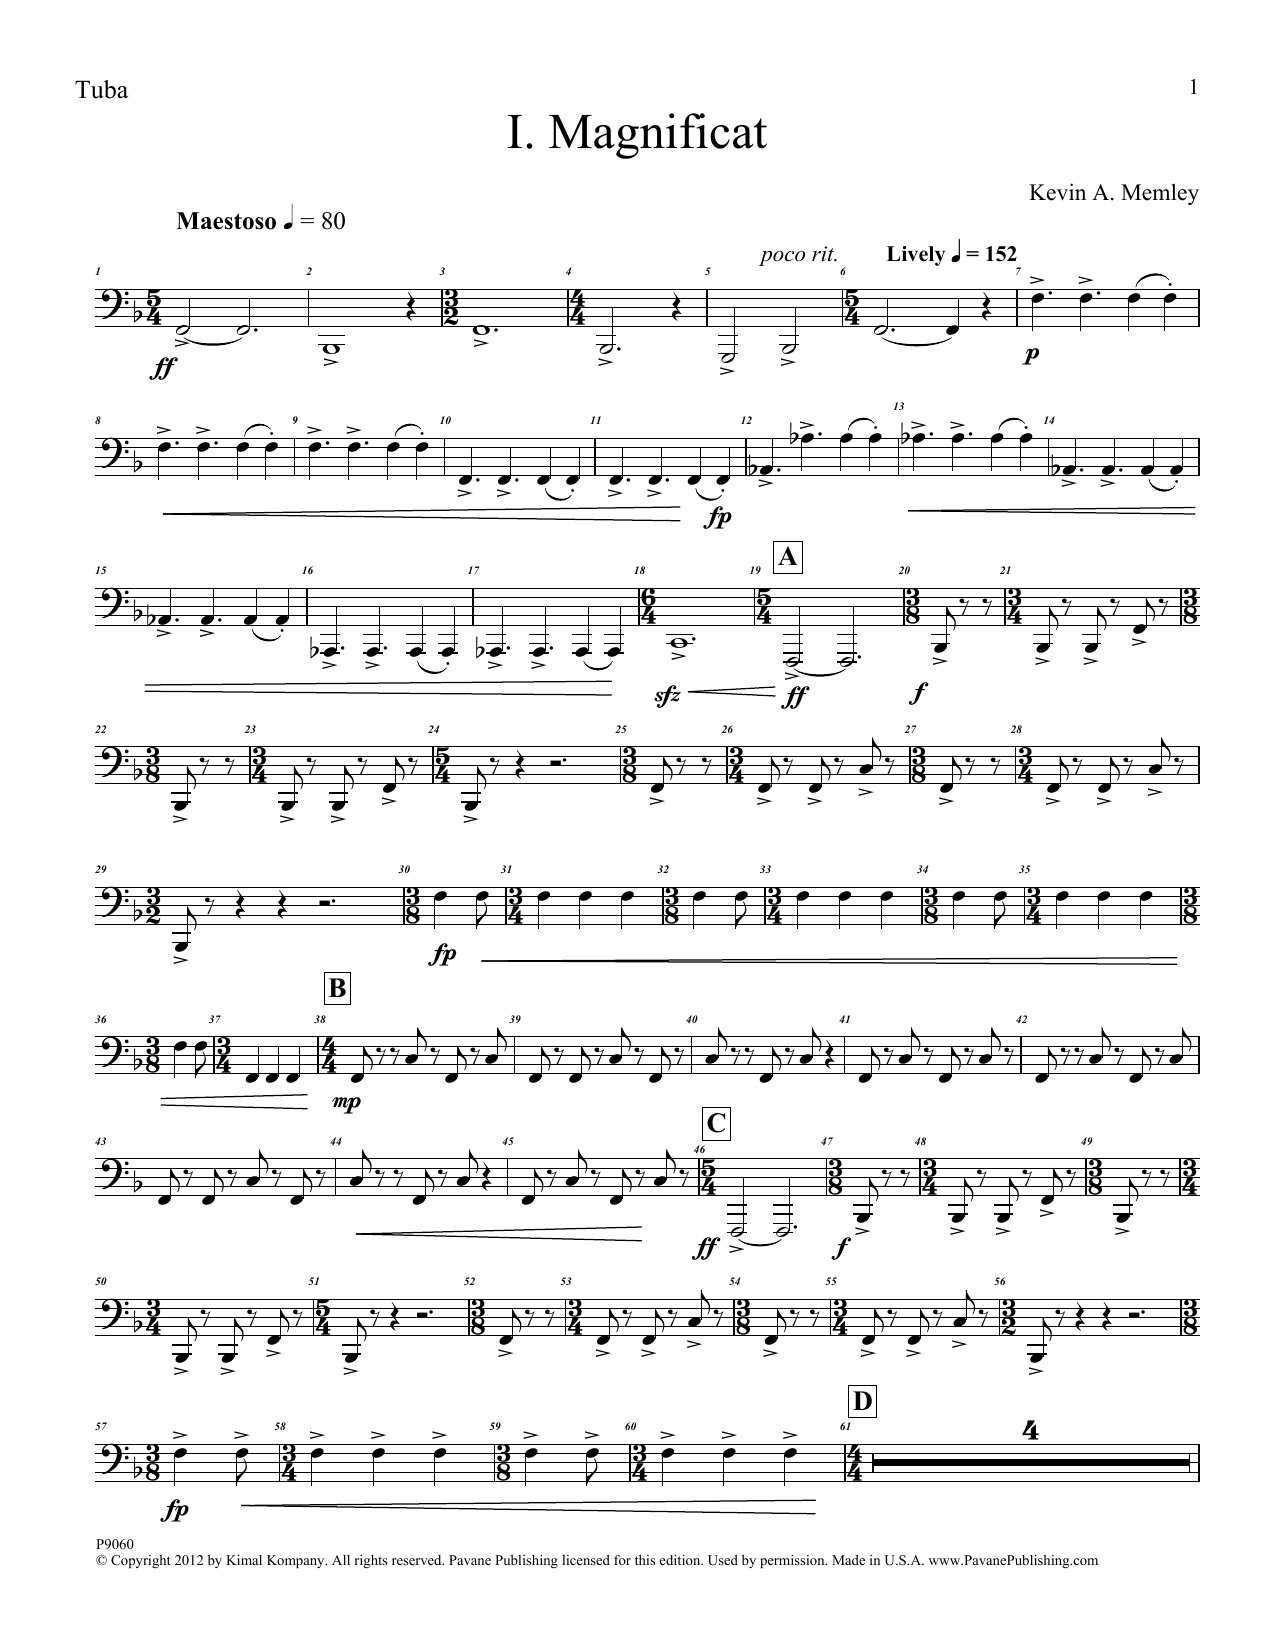 Download Kevin Memley Magnificat (Brass Quintet) (Parts) - Tu Sheet Music